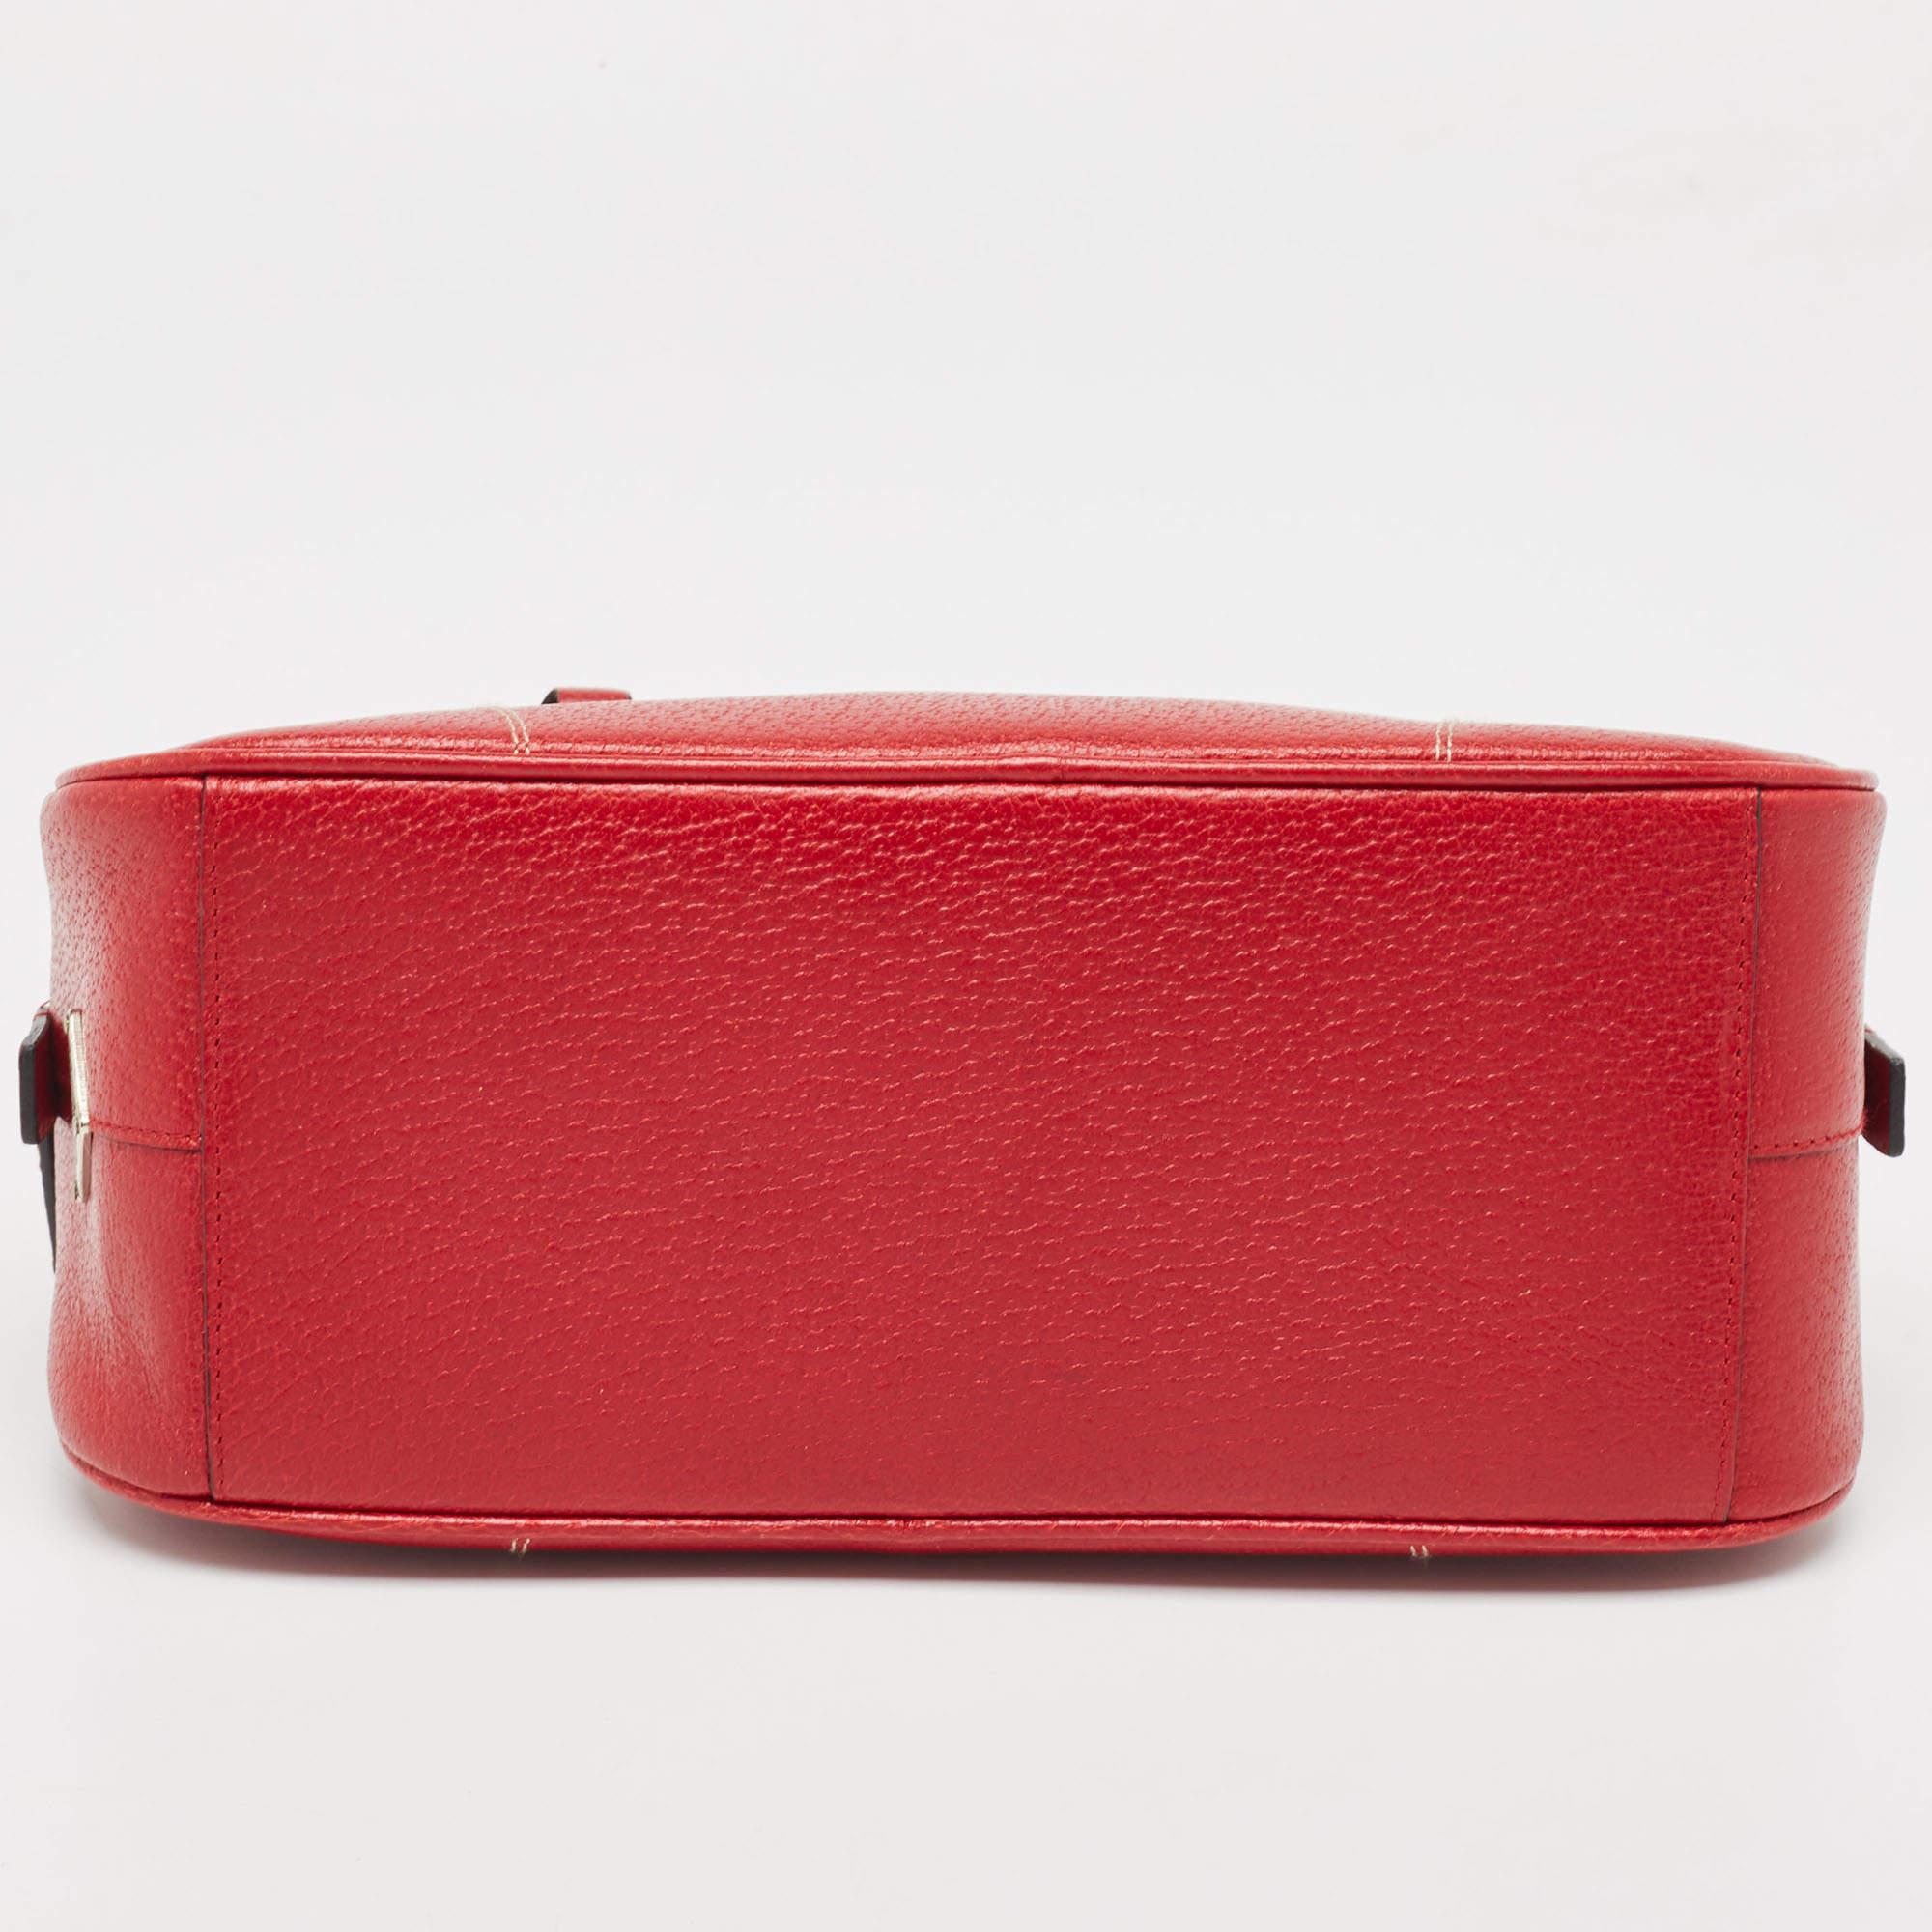 Prada Red Leather Mini Bowler Bag For Sale 5